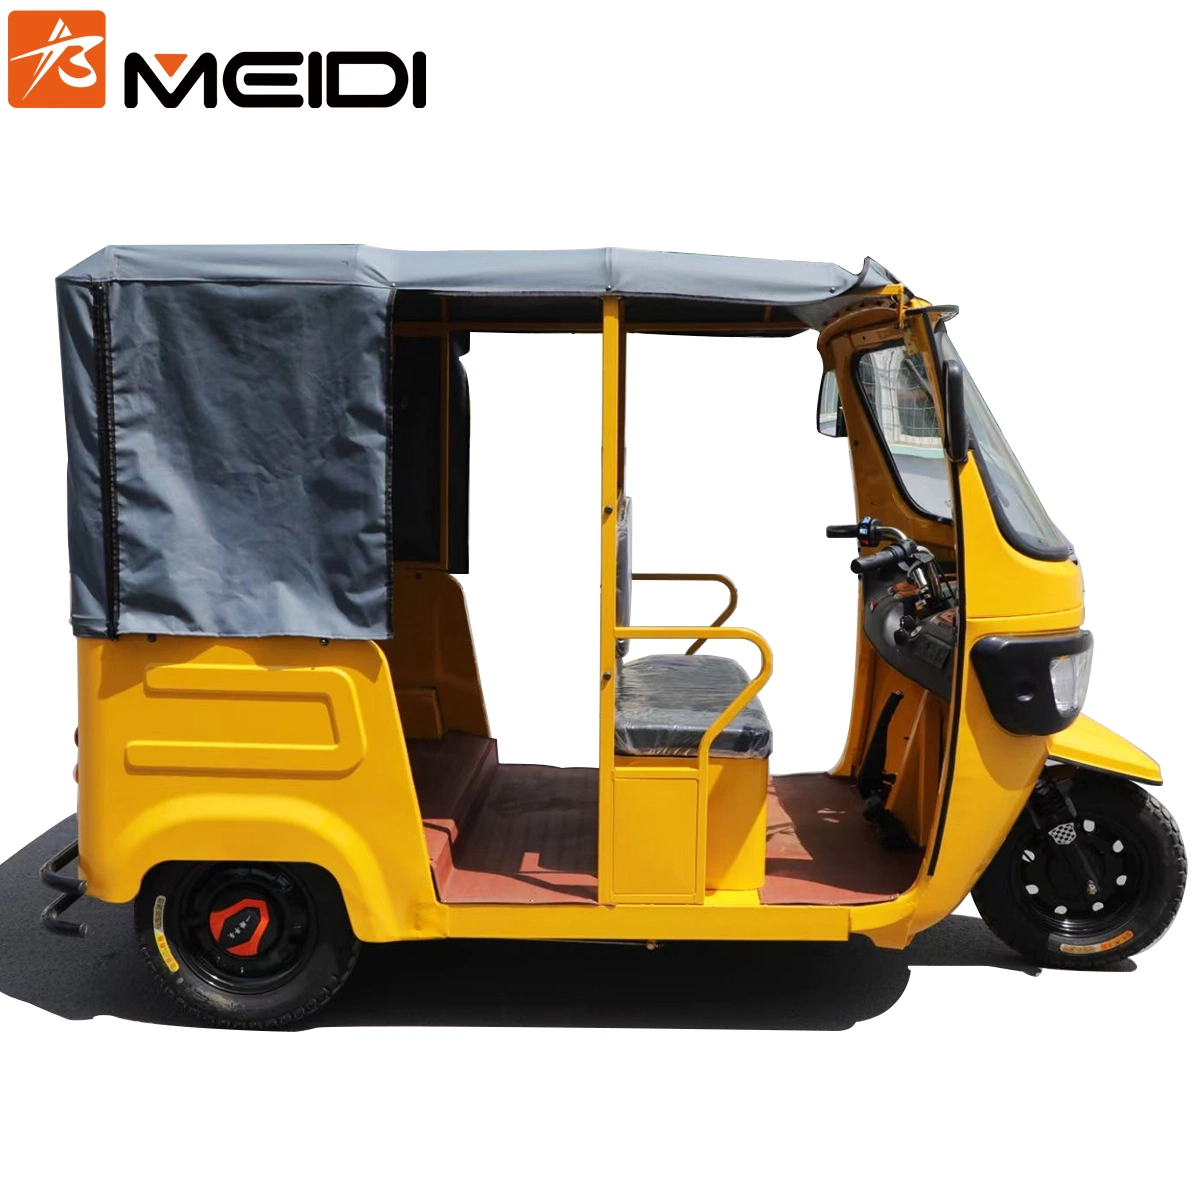 Meidi Xuzhou Fabrik Dreirad Elektro-Dreirad Batterie Betrieben Auto Rickshaw